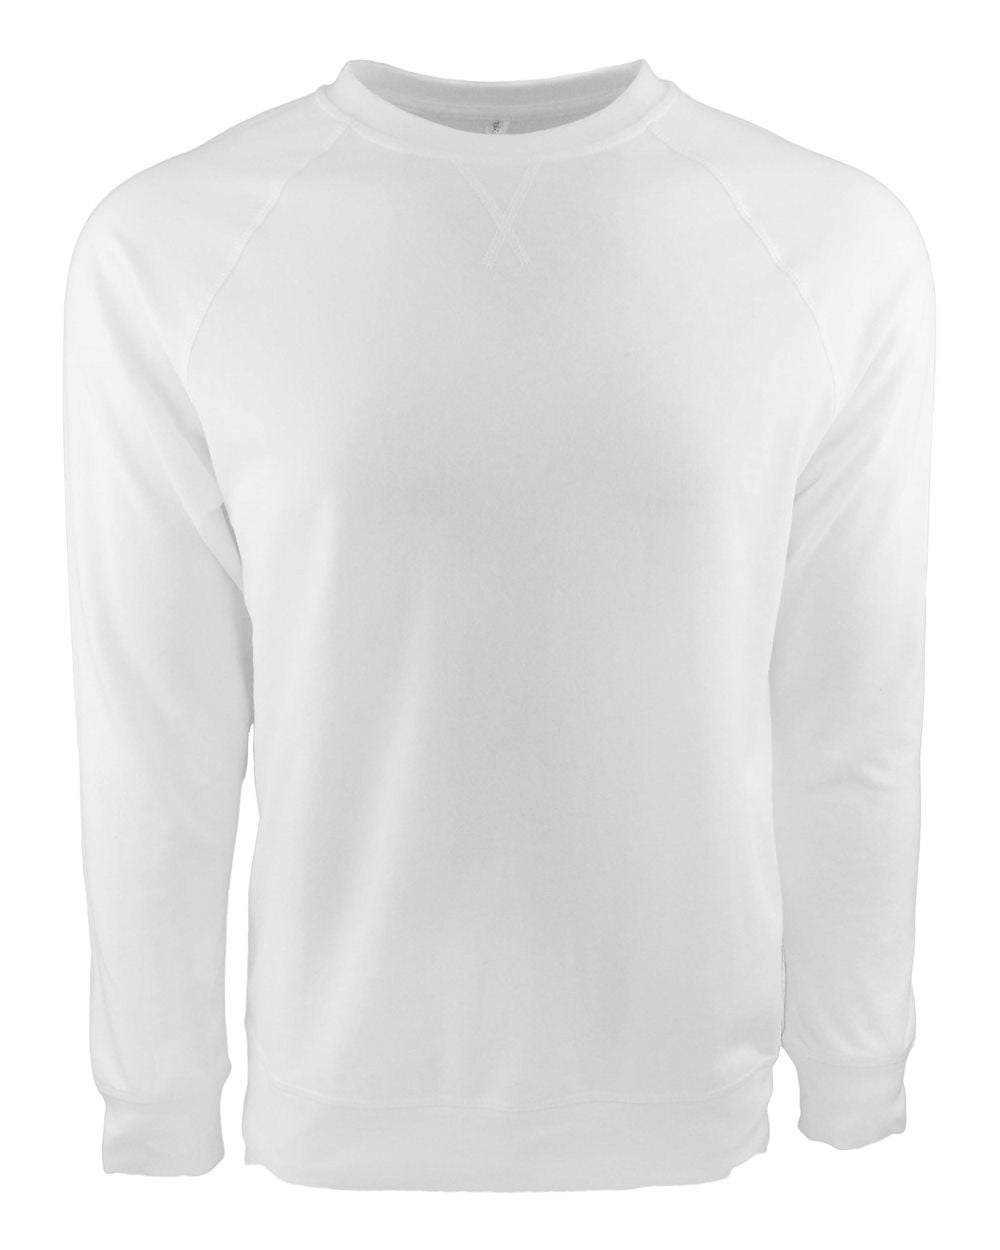 Next Level - Unisex Laguna Raglan Crewneck Sweatshirt - 9000 White